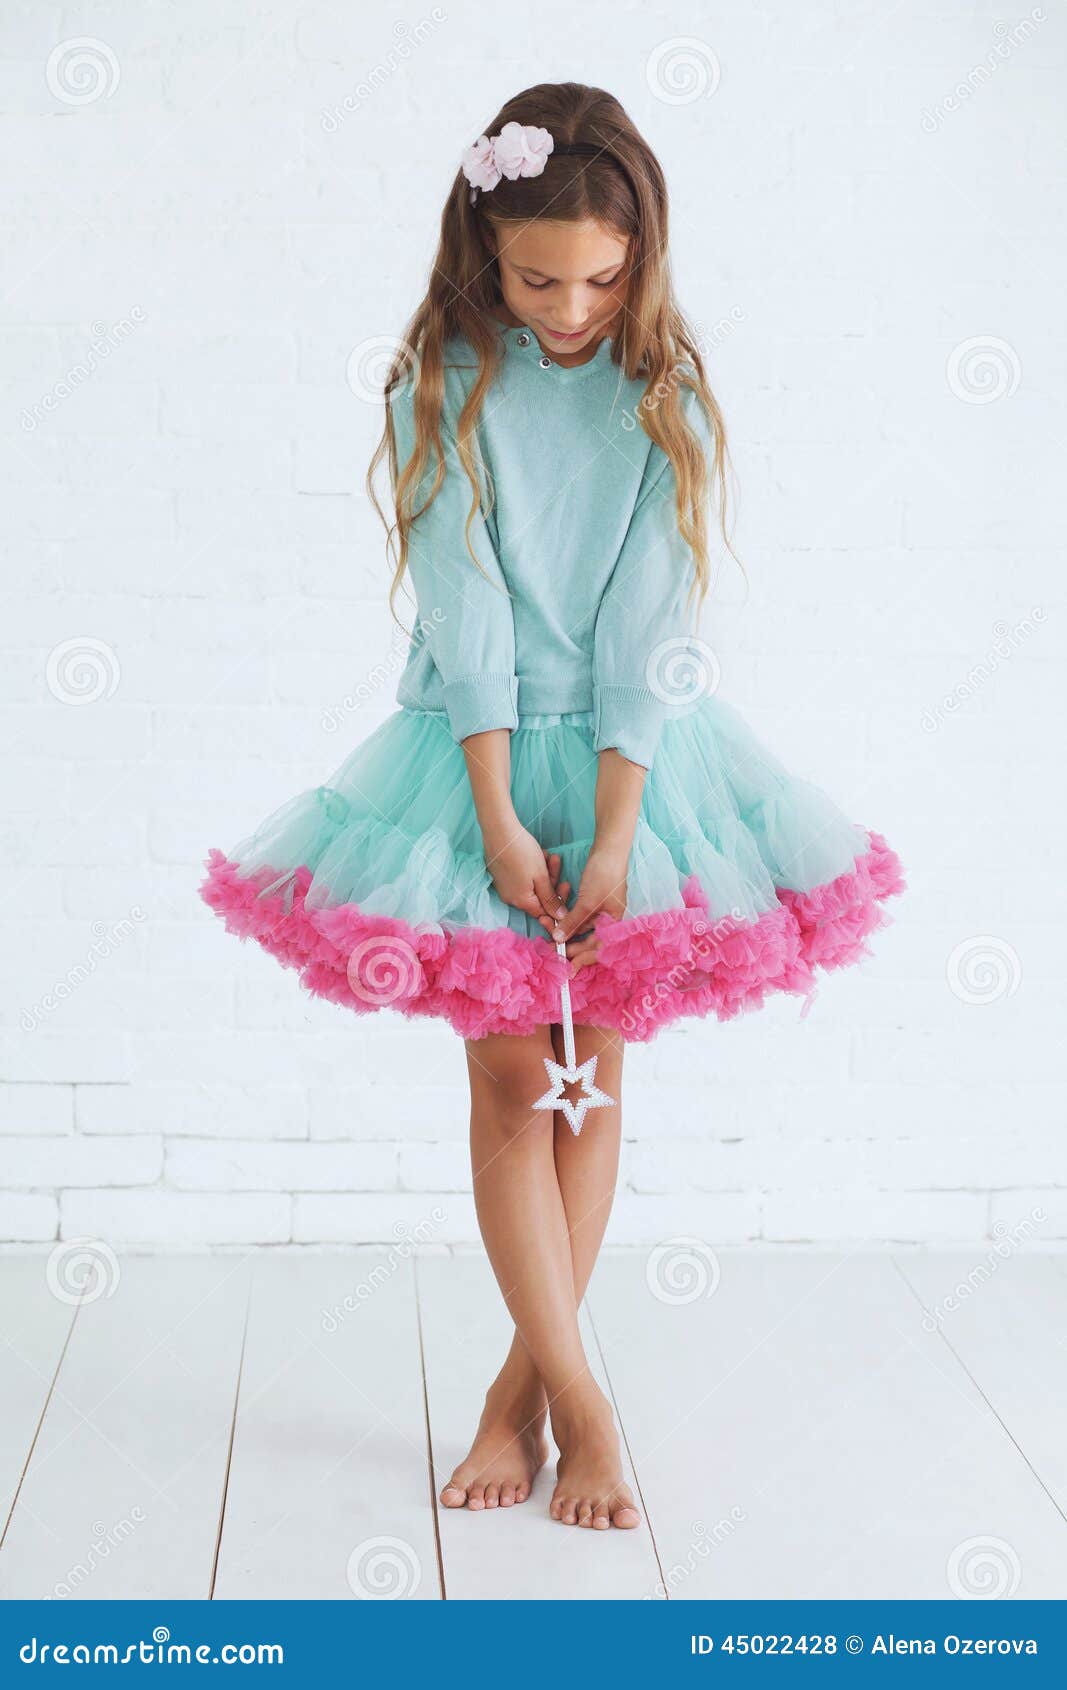 Candy princess stock photo. Image of barefoot, holiday - 45022428